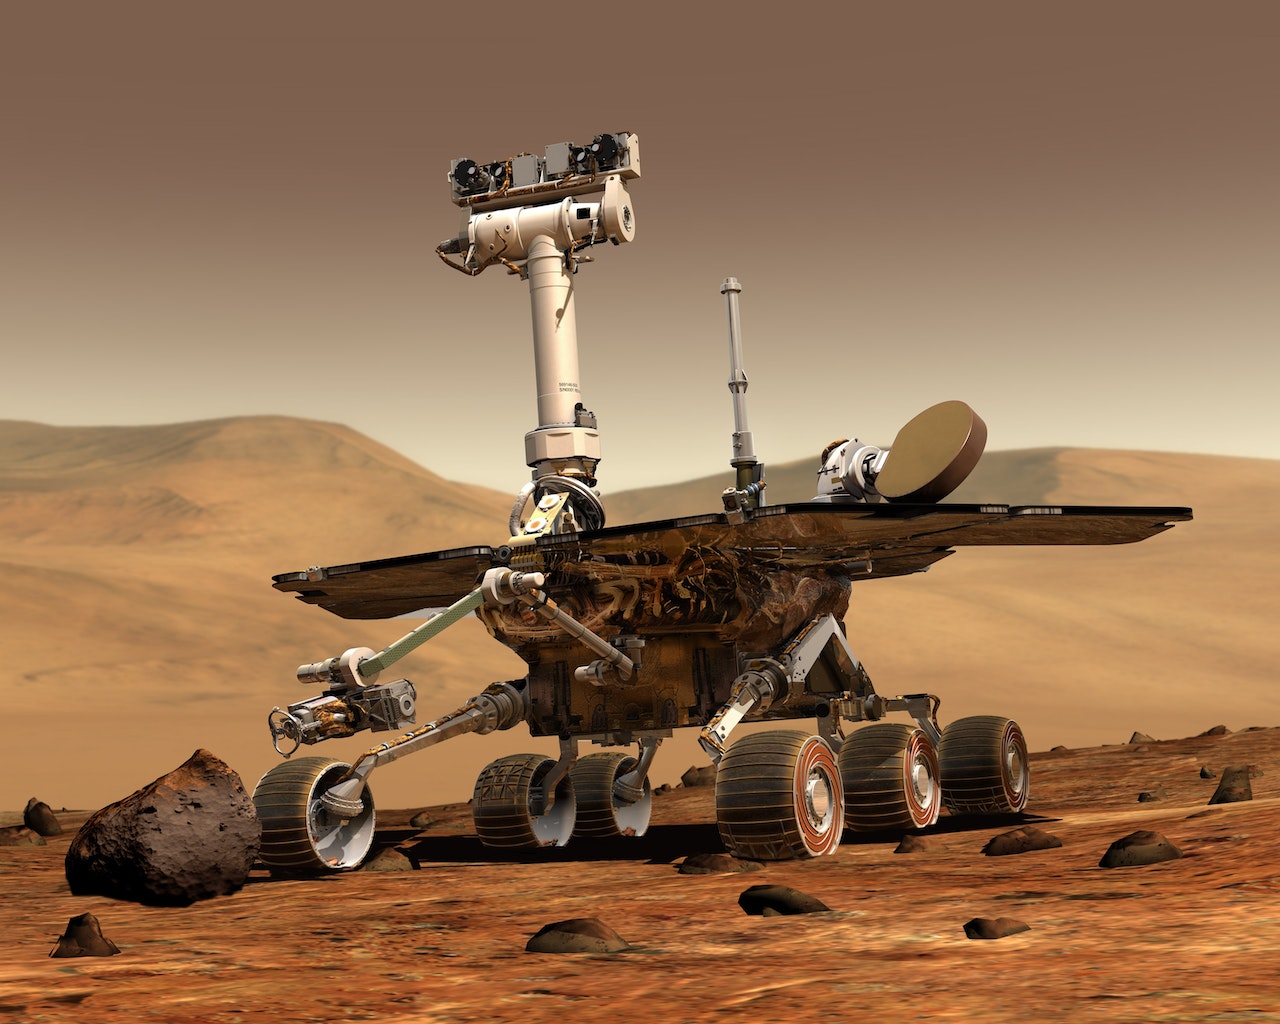 Nasa robot on Mars exploring the space